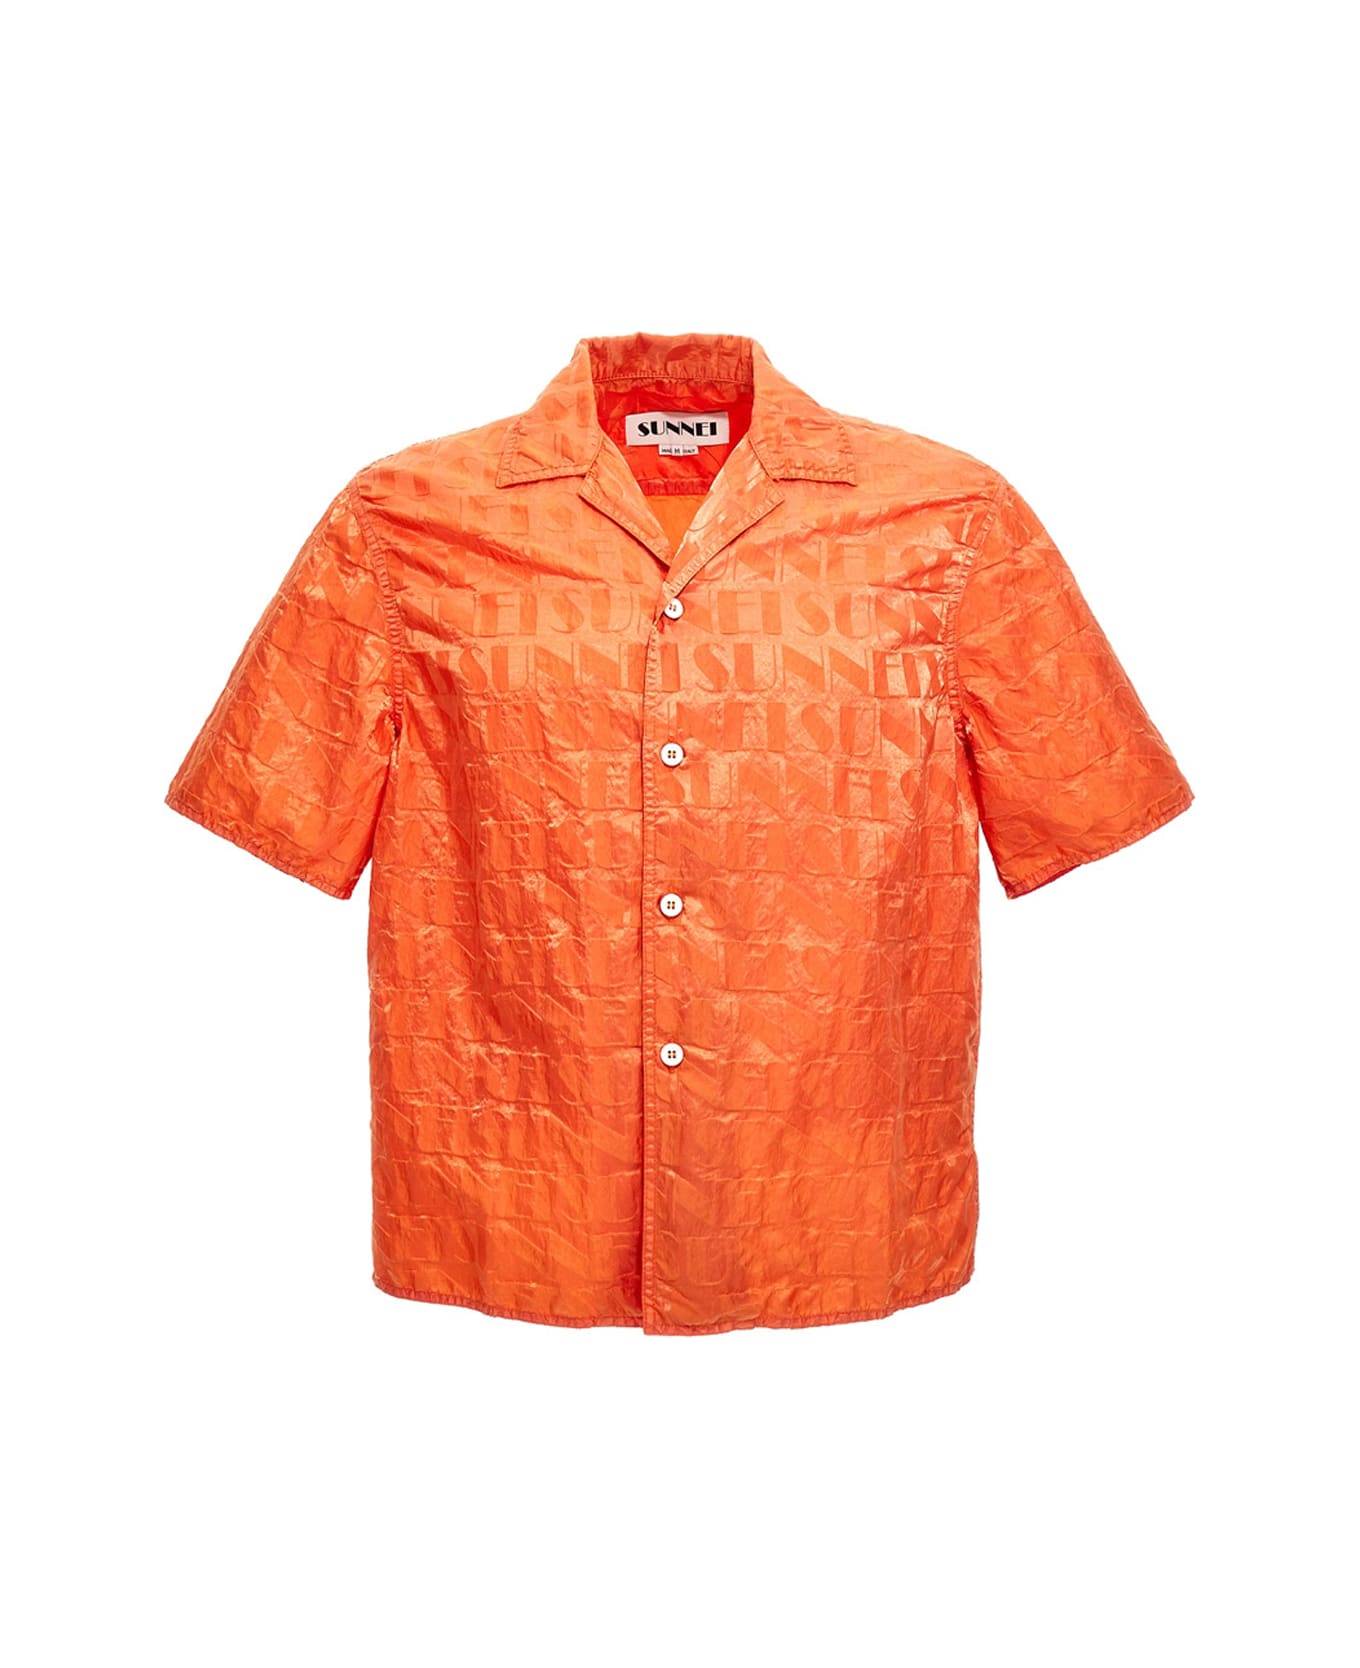 Sunnei Logo Shirt - Orange シャツ